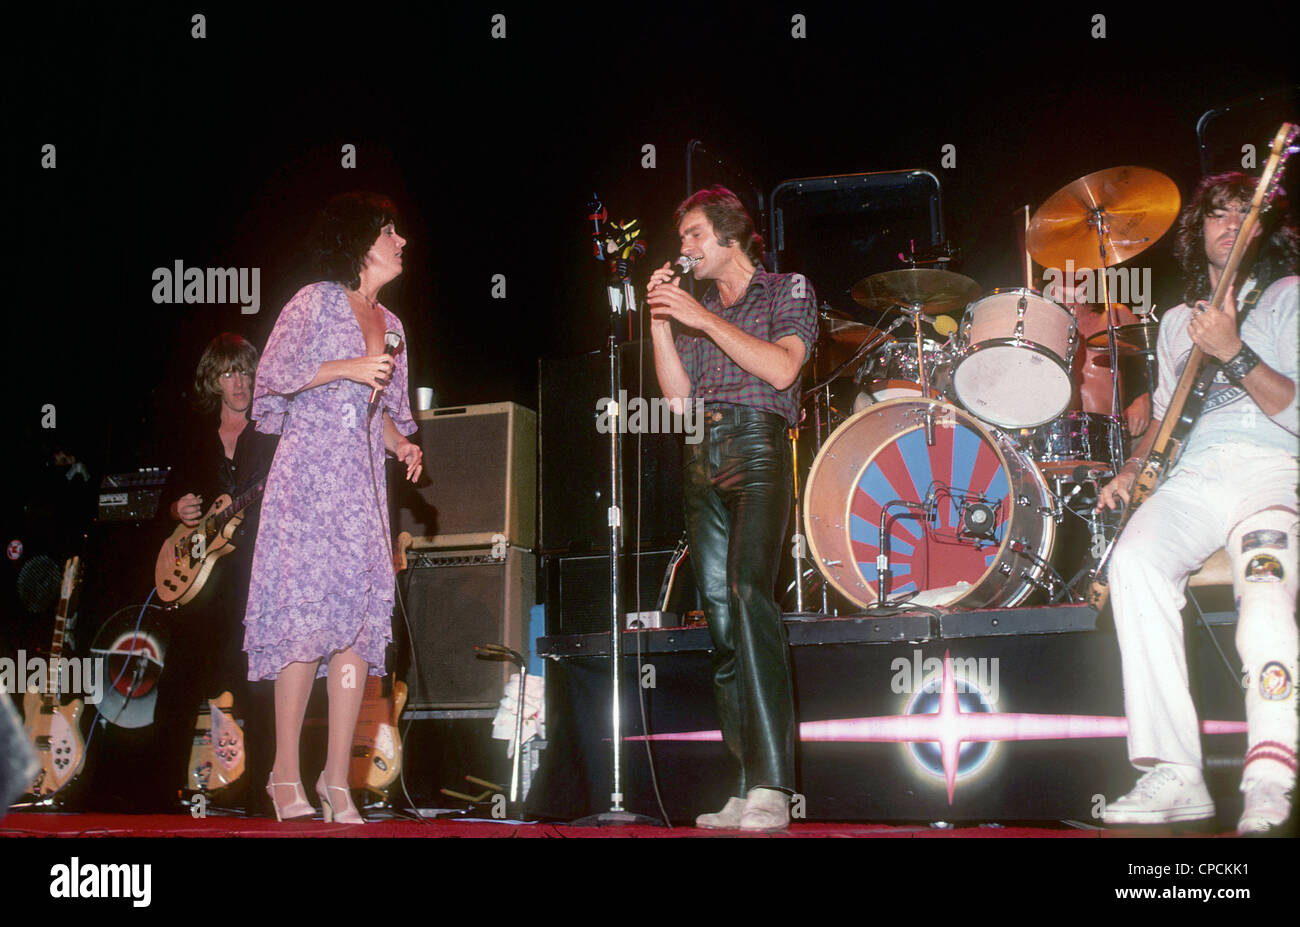 JEFFERSON STARSHIP noi del gruppo rock circa 1974. Foto di Jeffrey Mayer Foto Stock